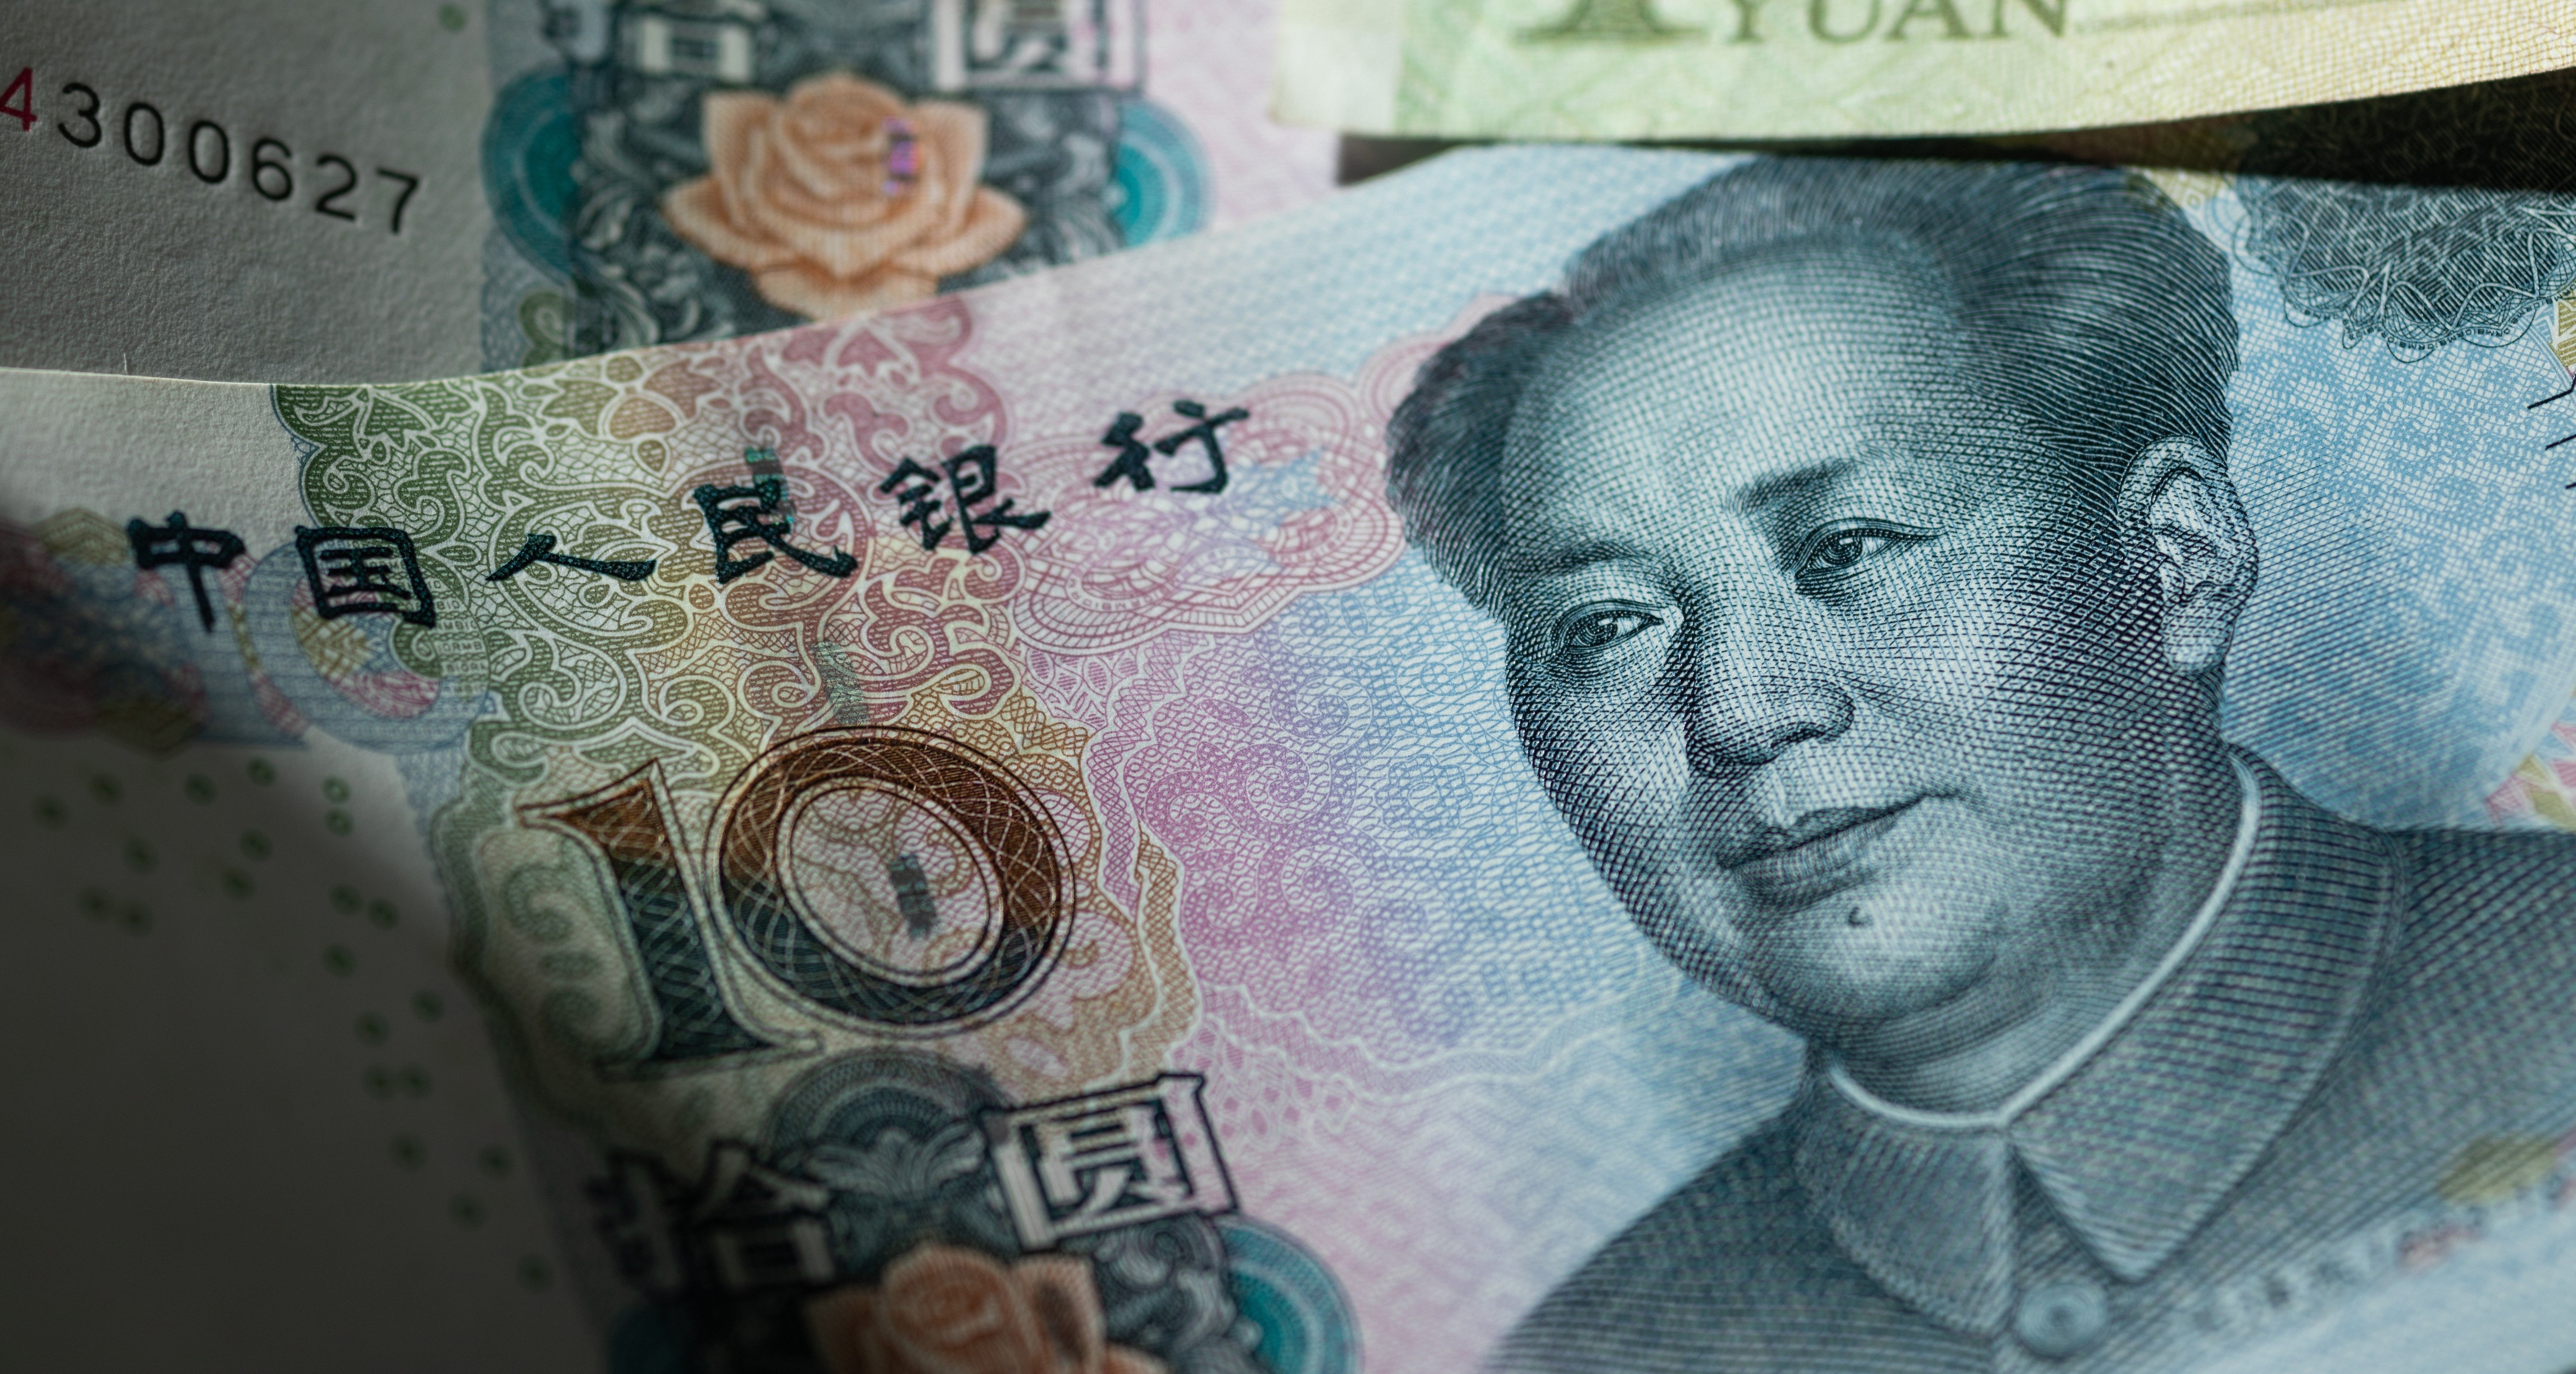 30000 долларов в юанях. Китайский юань. Китайский доллар. Юань (валюта). Валюта Китая.